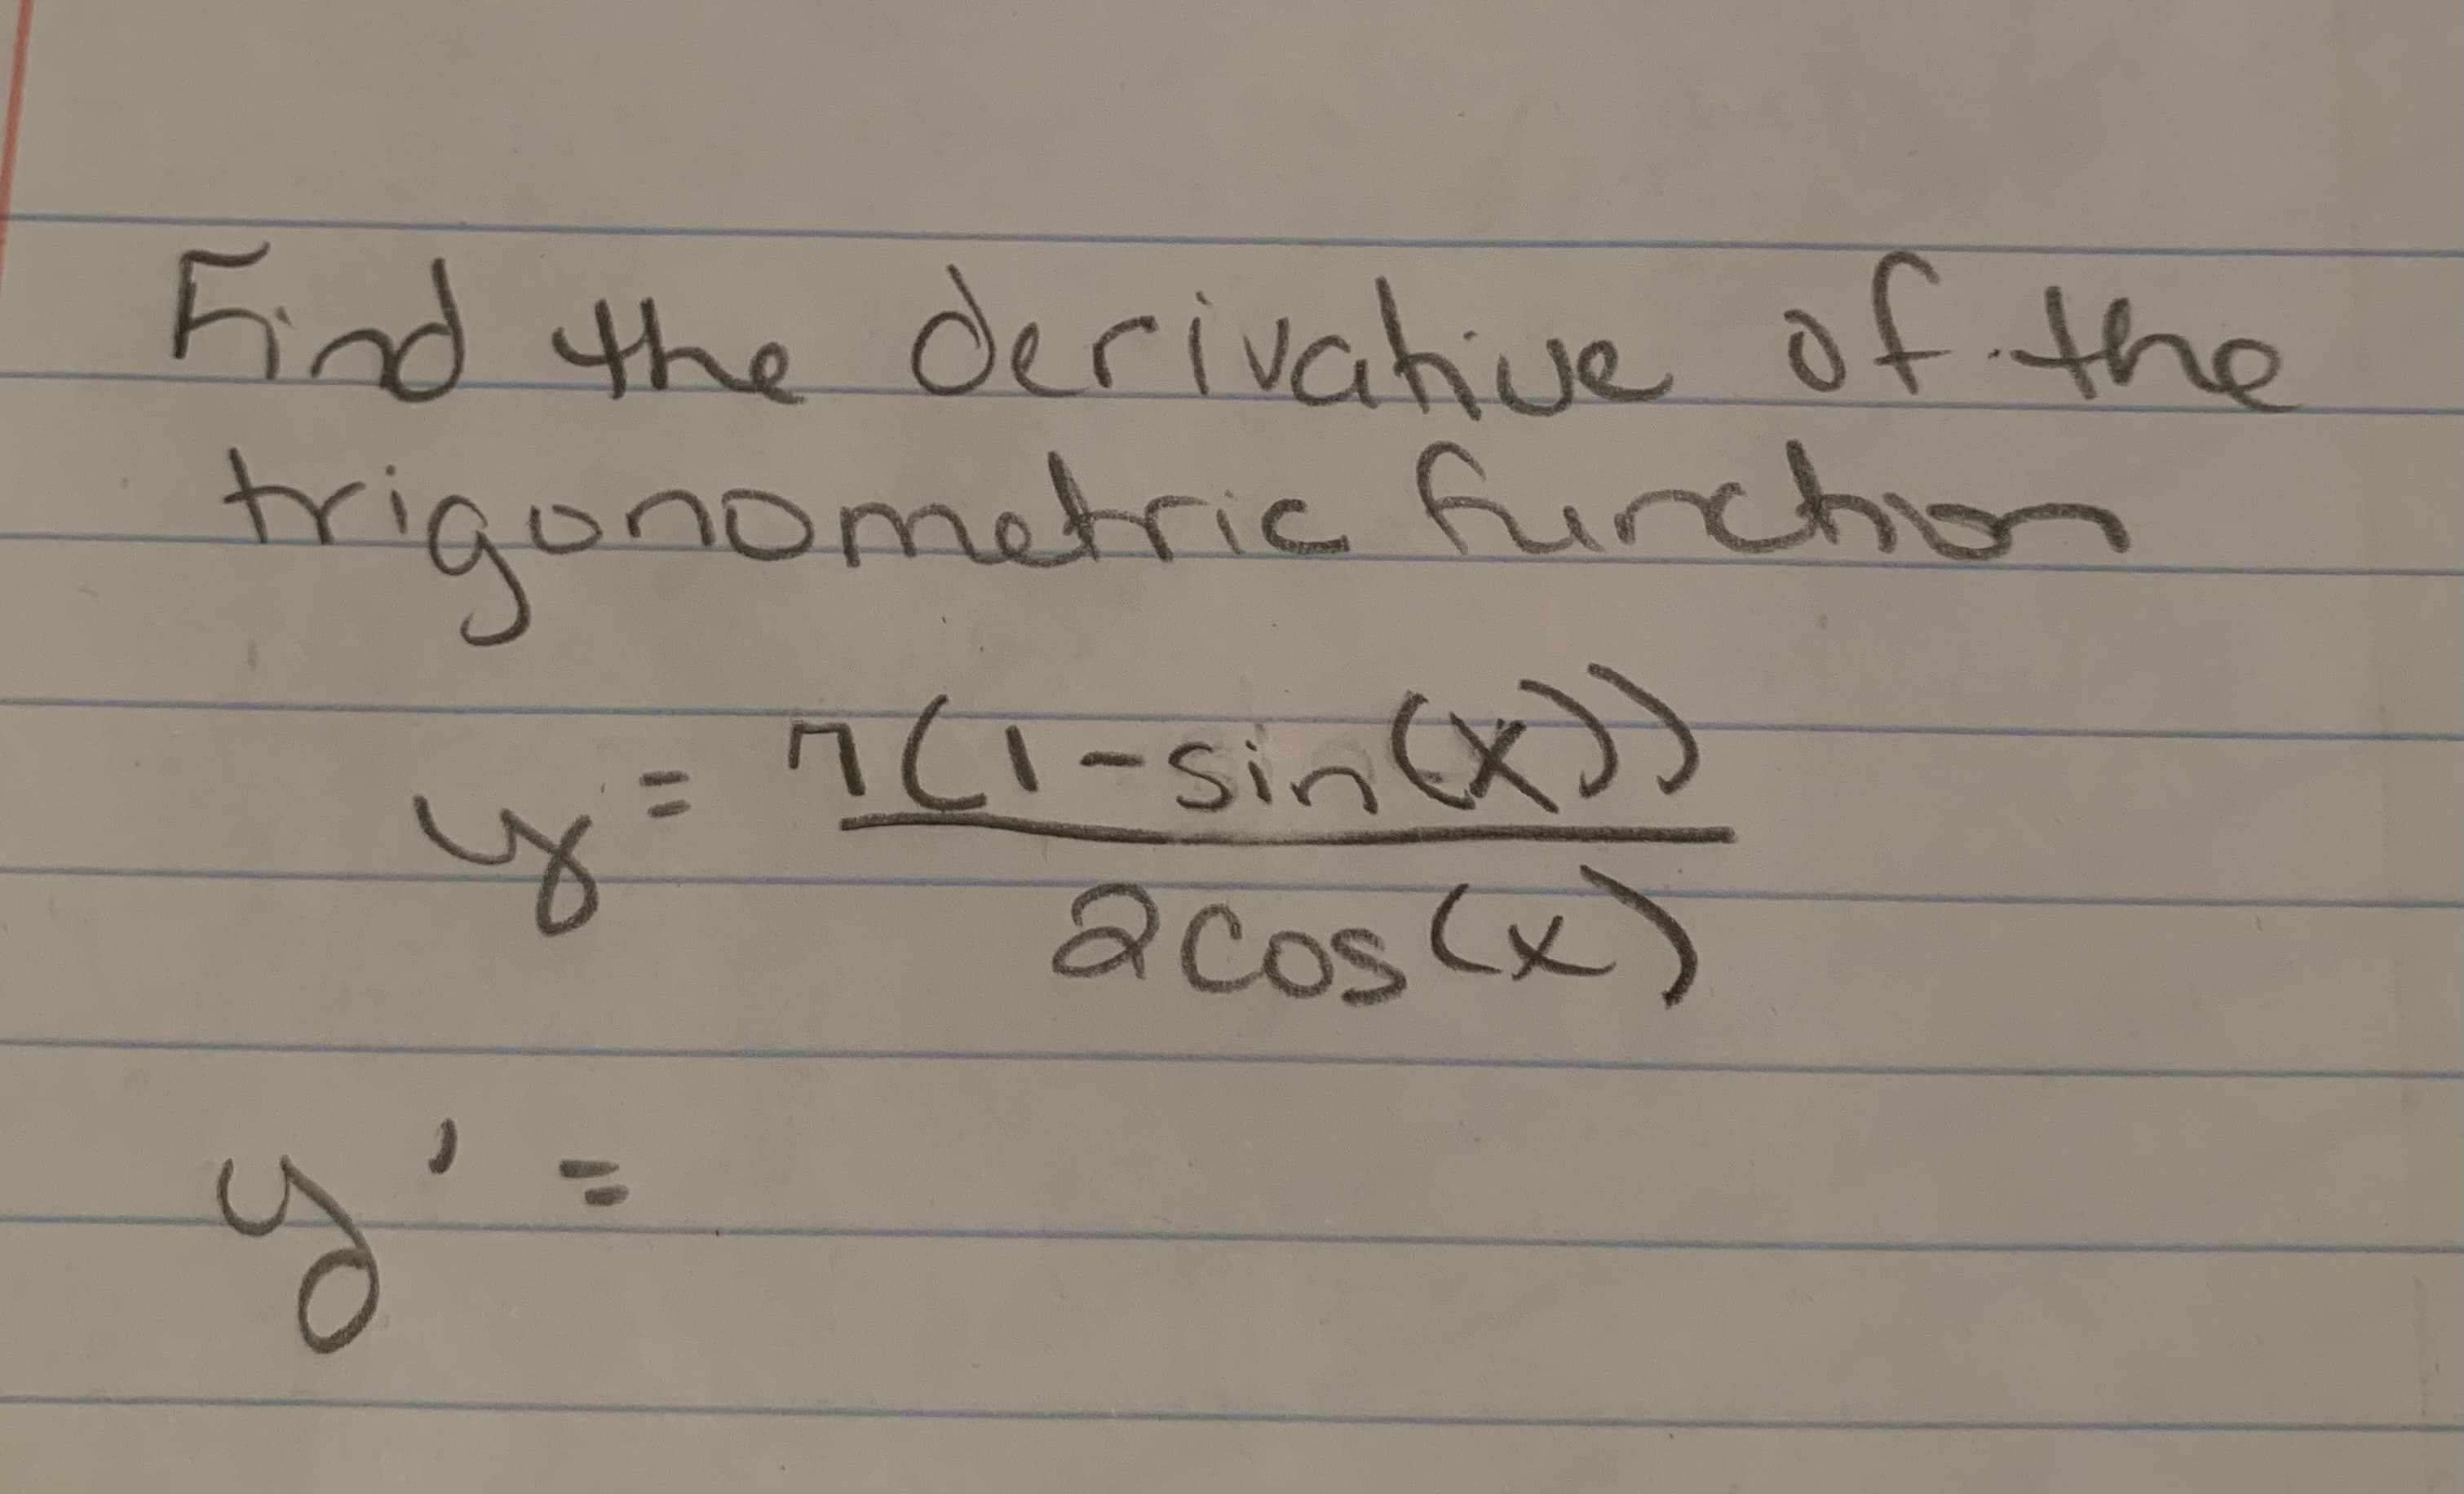 Find the derivahive of the
trigonometric funchon
tri
Sir
%3D
acos (x)
